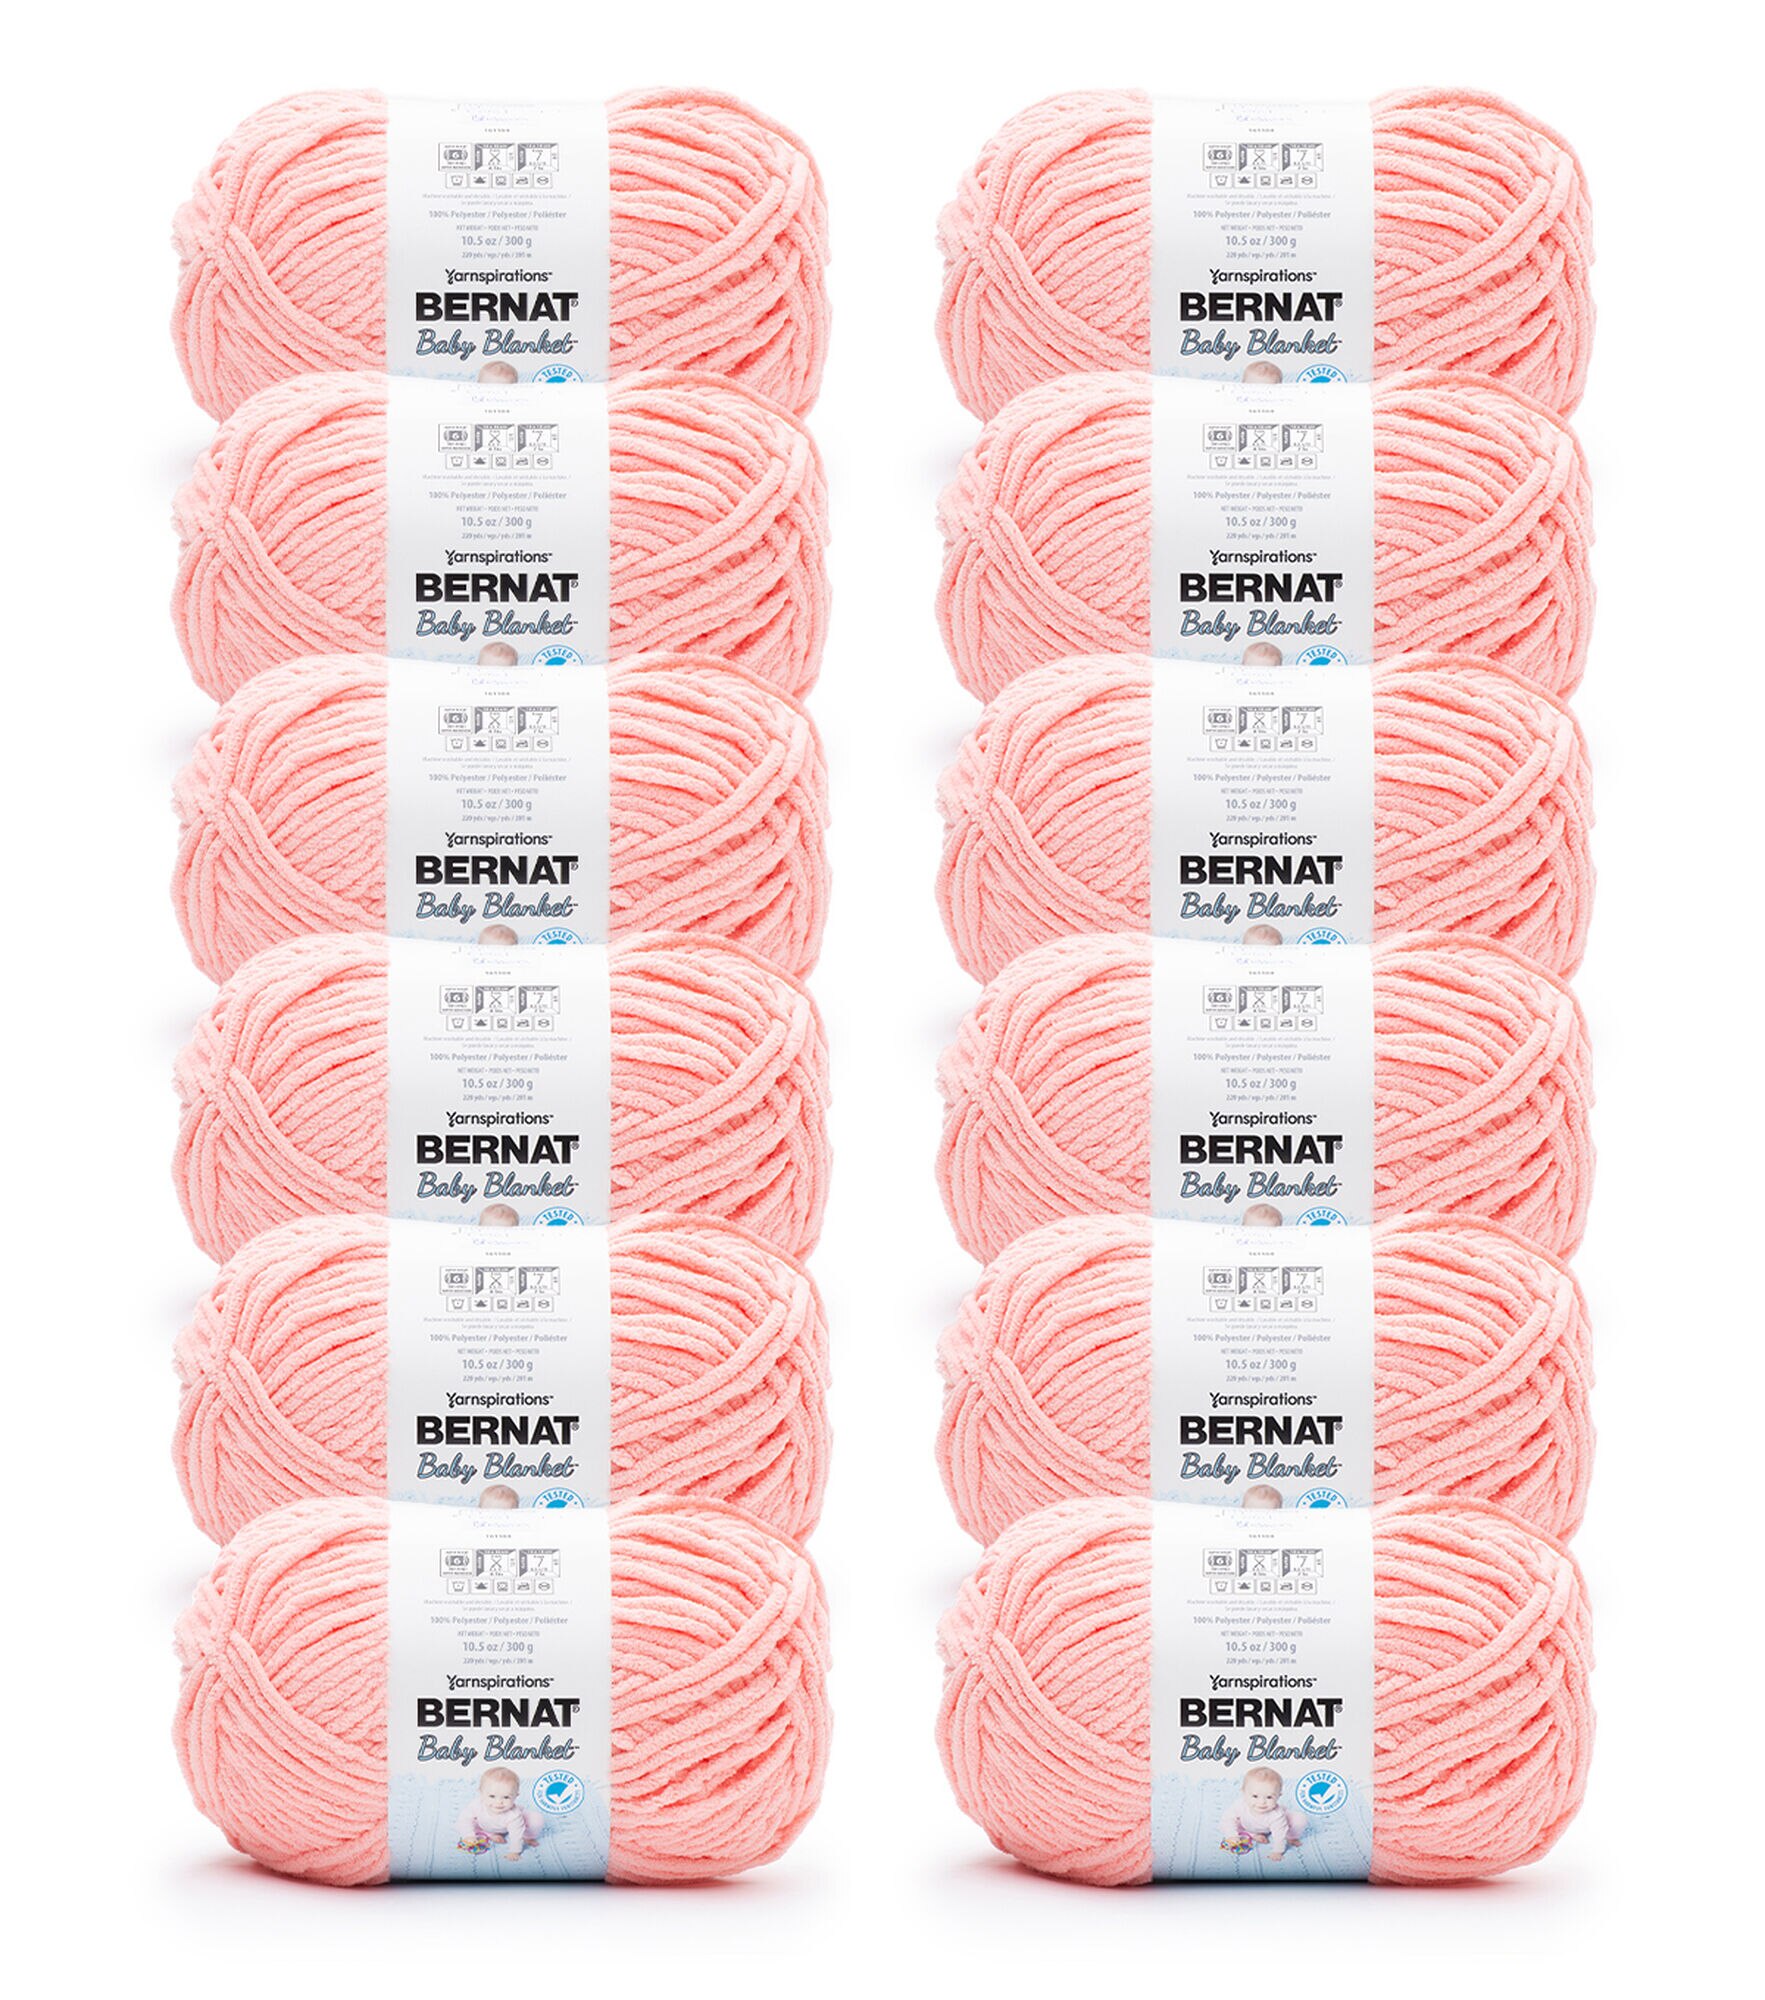 Bernat Baby Blanket Yarn - Big Ball (10.5 oz) - 3 Pack (Seafoam Print)